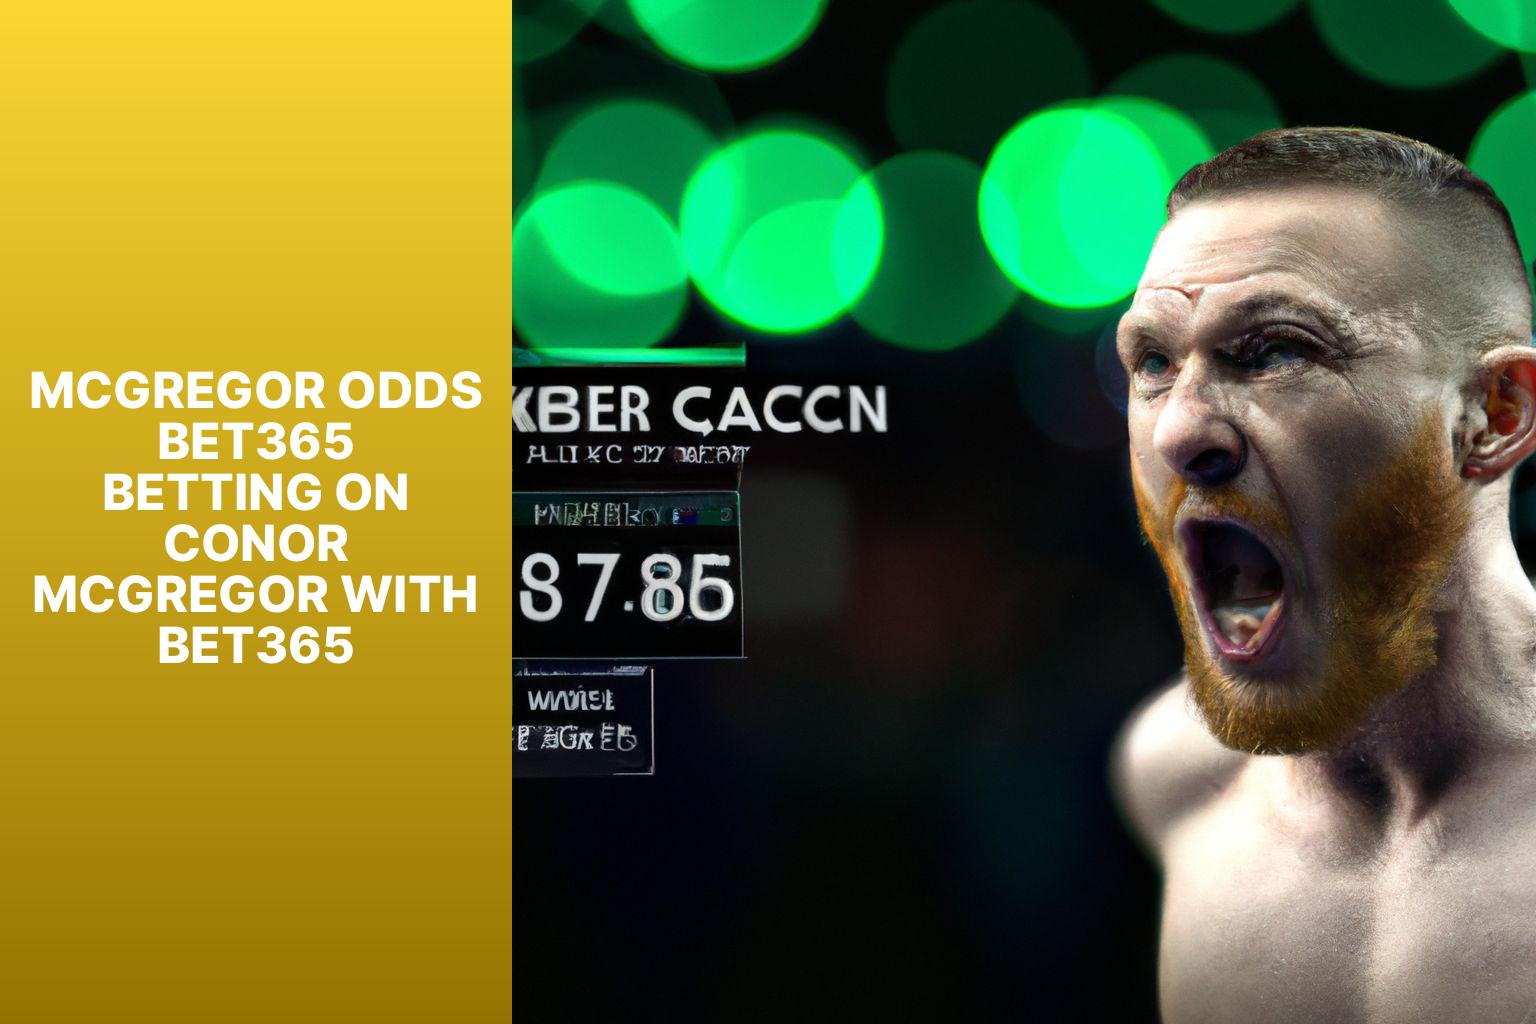 McGregor Odds Bet365 Betting on Conor McGregor with Bet365